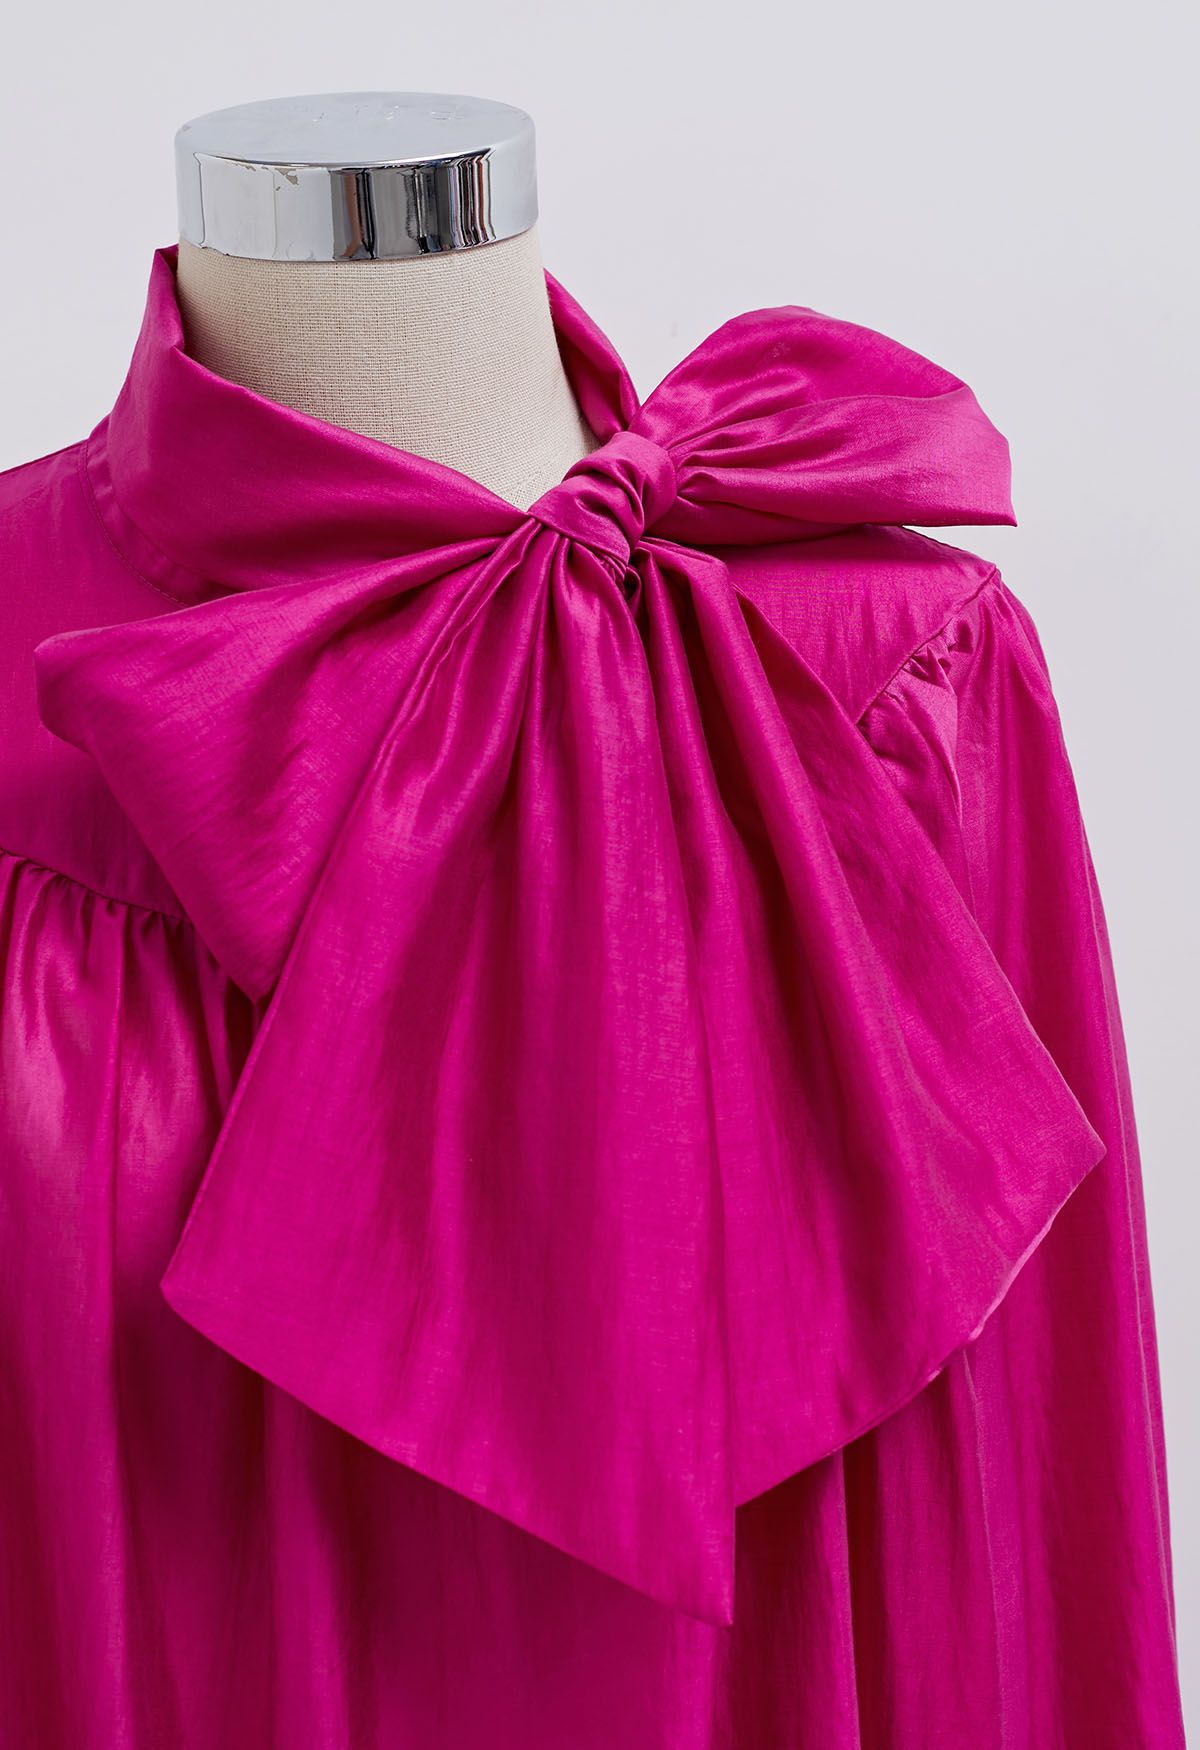 Charming Bowknot Puff Sleeve Sheer Shirt in Hot Pink